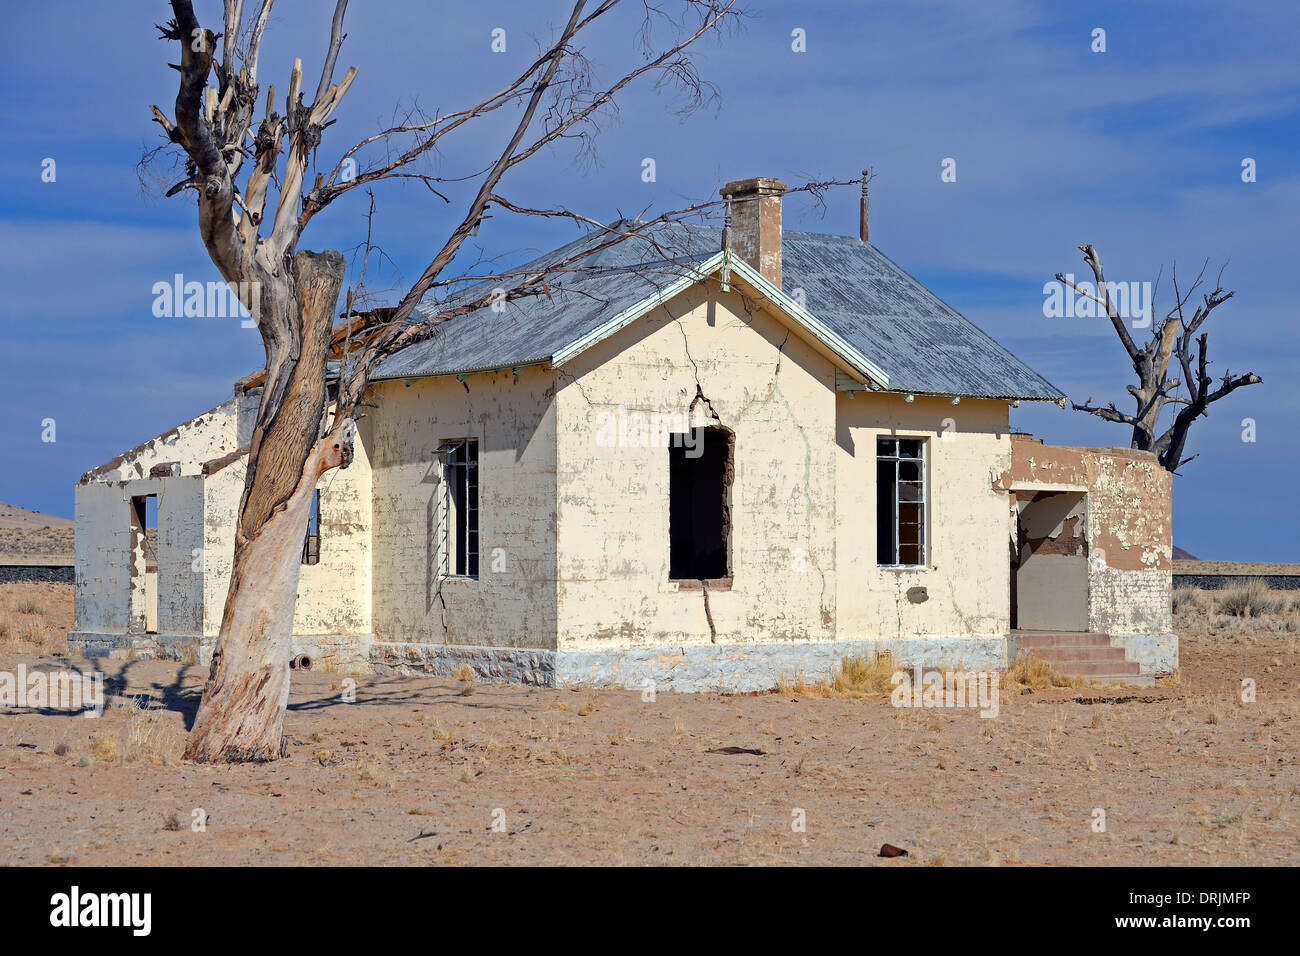 dilapidated road court building of Garub with From, Namibia, Africa, verfallenes Bahnshofsgebaeude von Garub bei Aus, Afrika Stock Photo